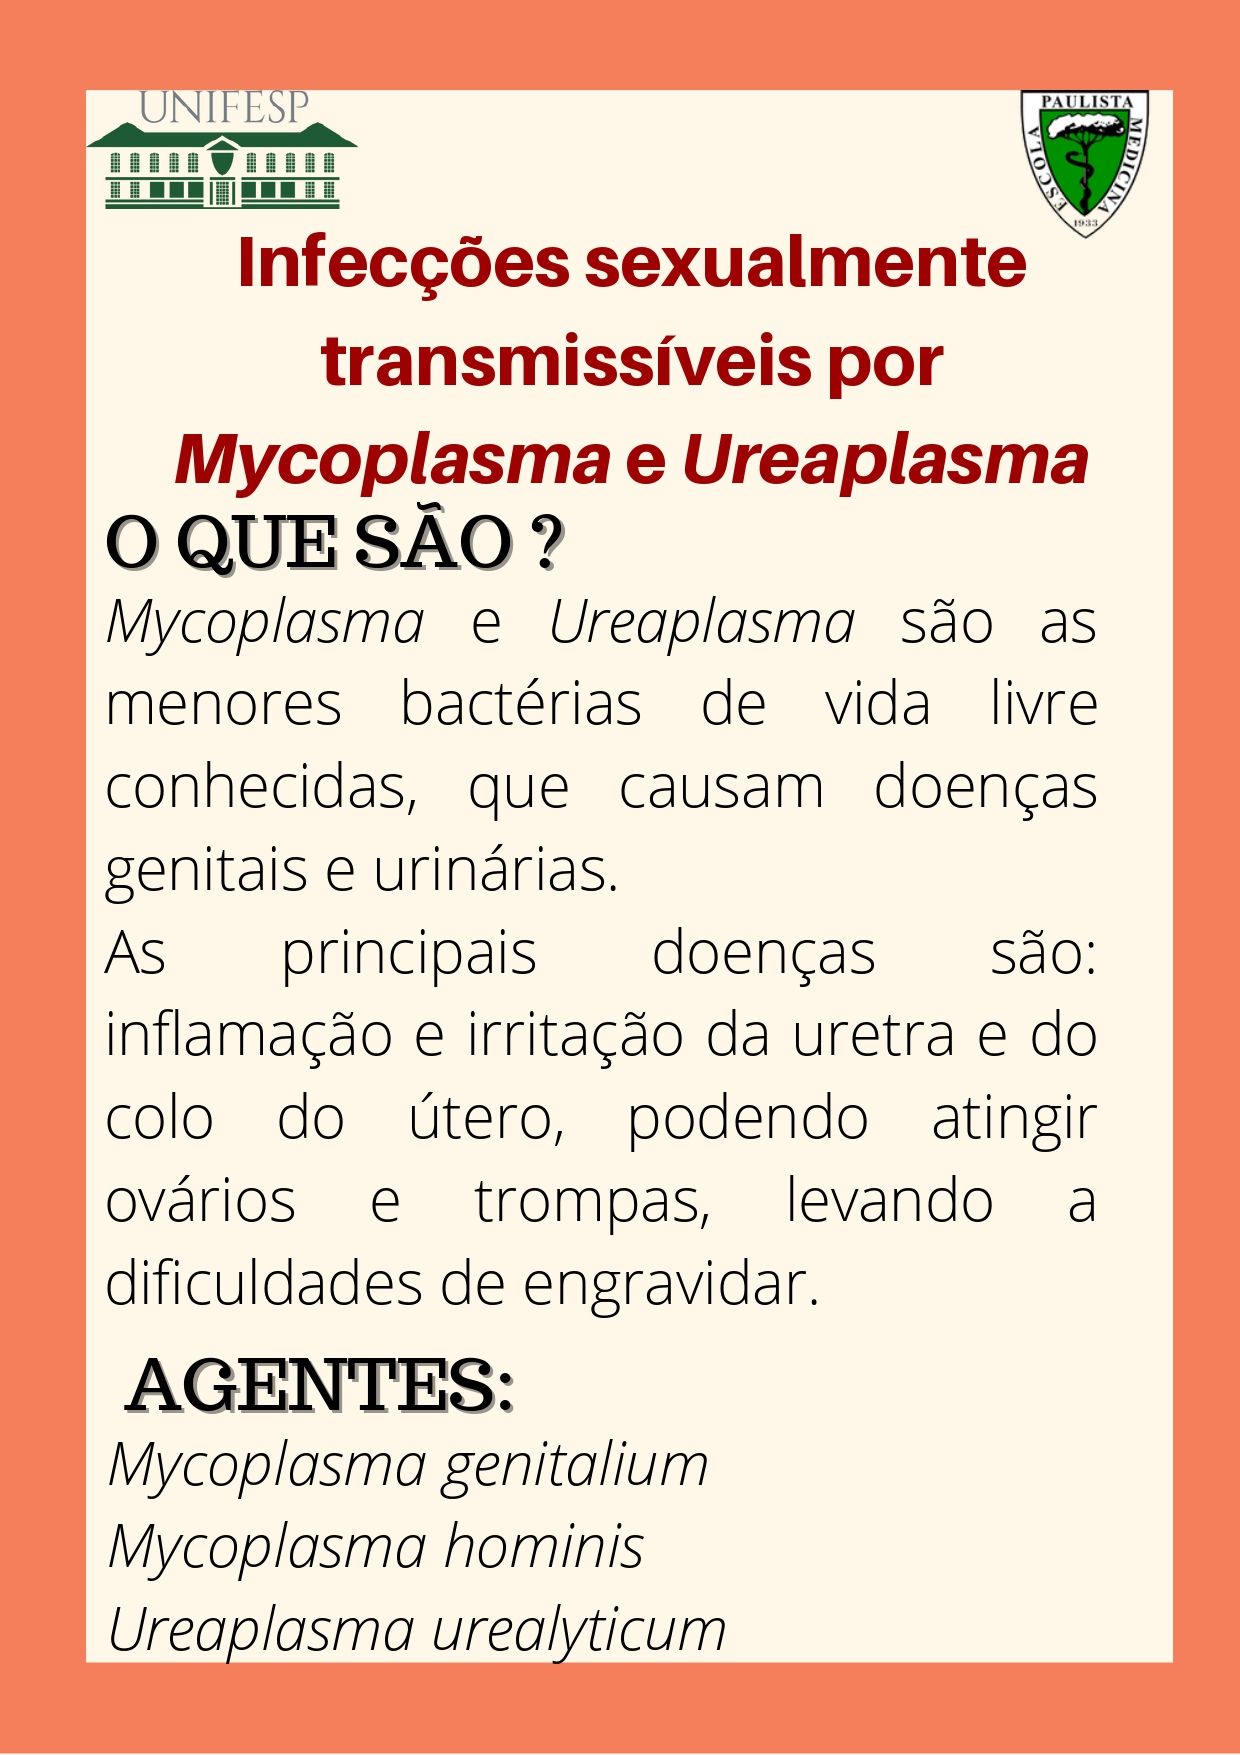 Mycoplasma e Ureaplasma page 0001